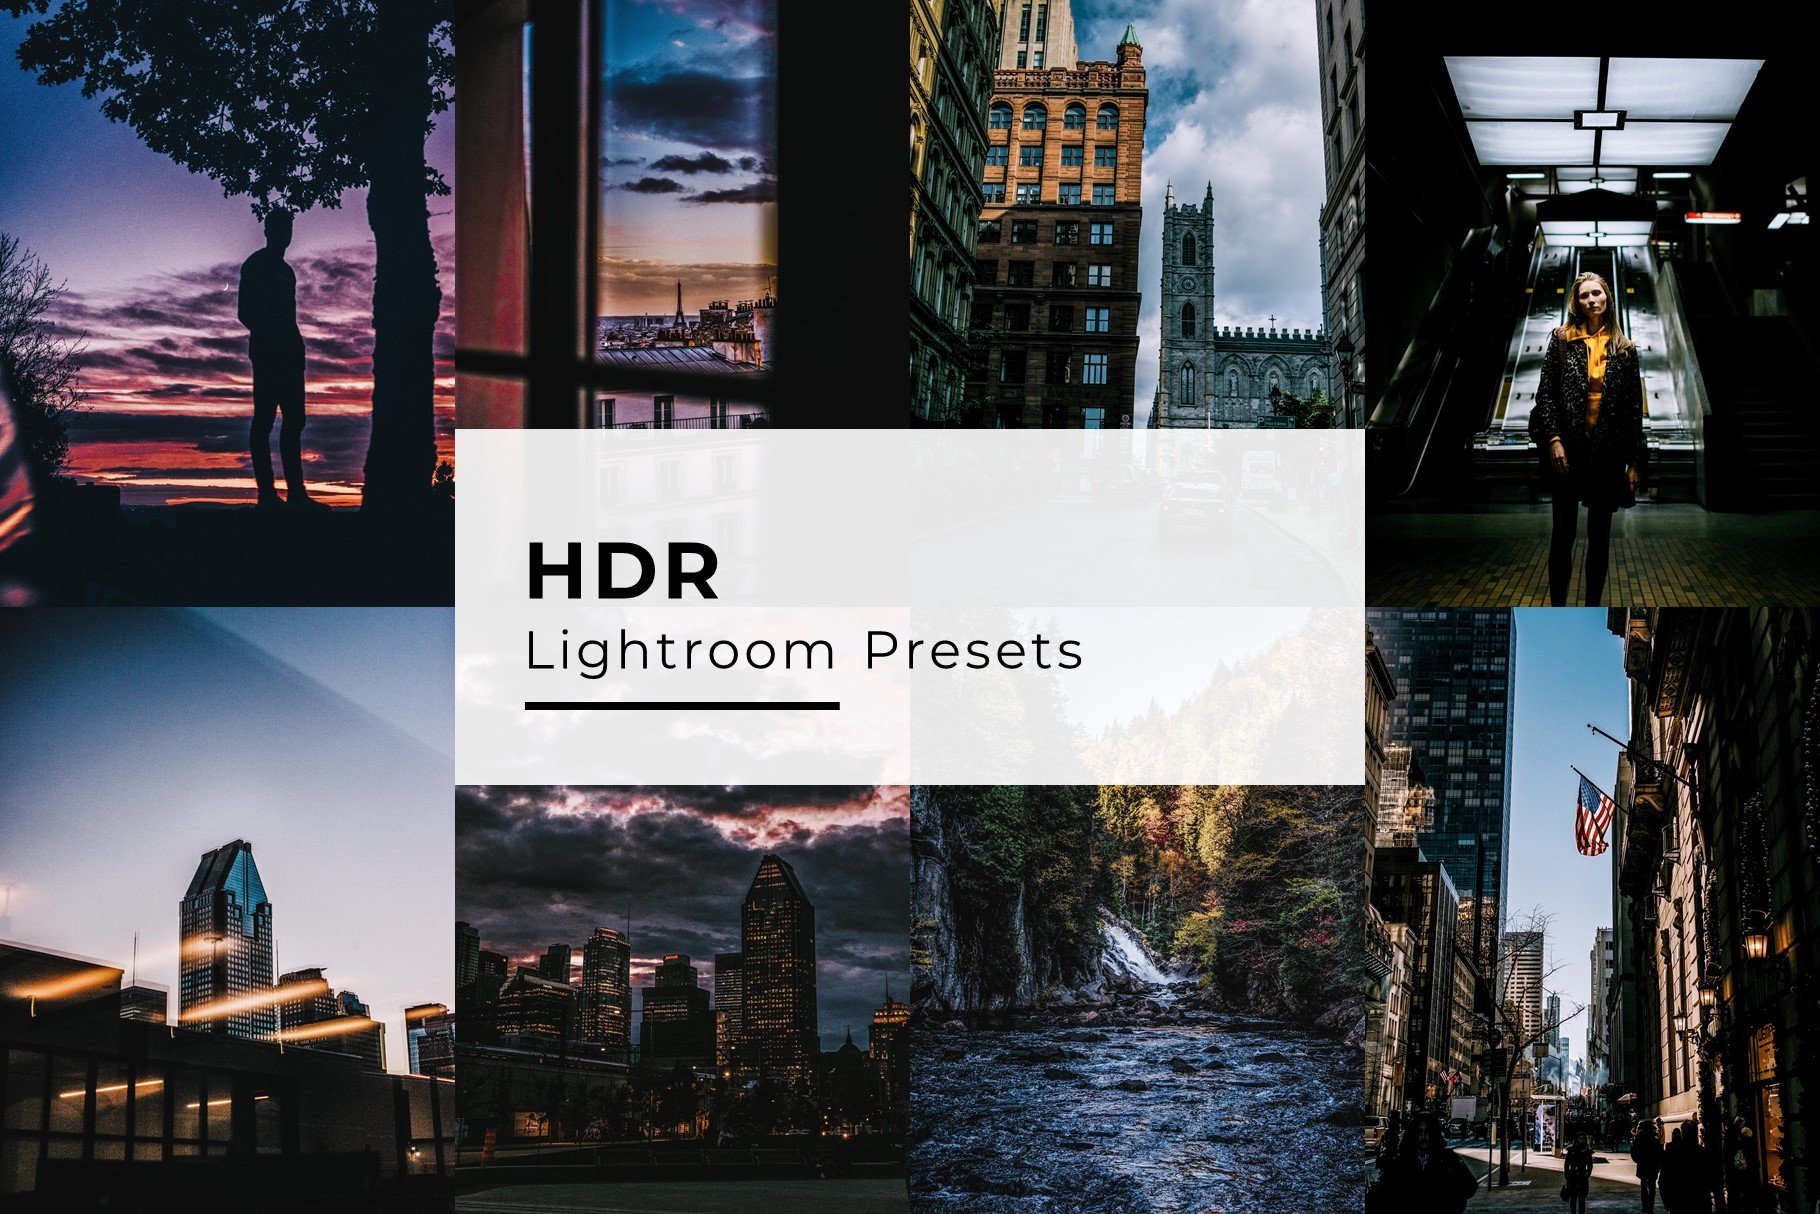 10 HDR Lightroom Presetscover image.